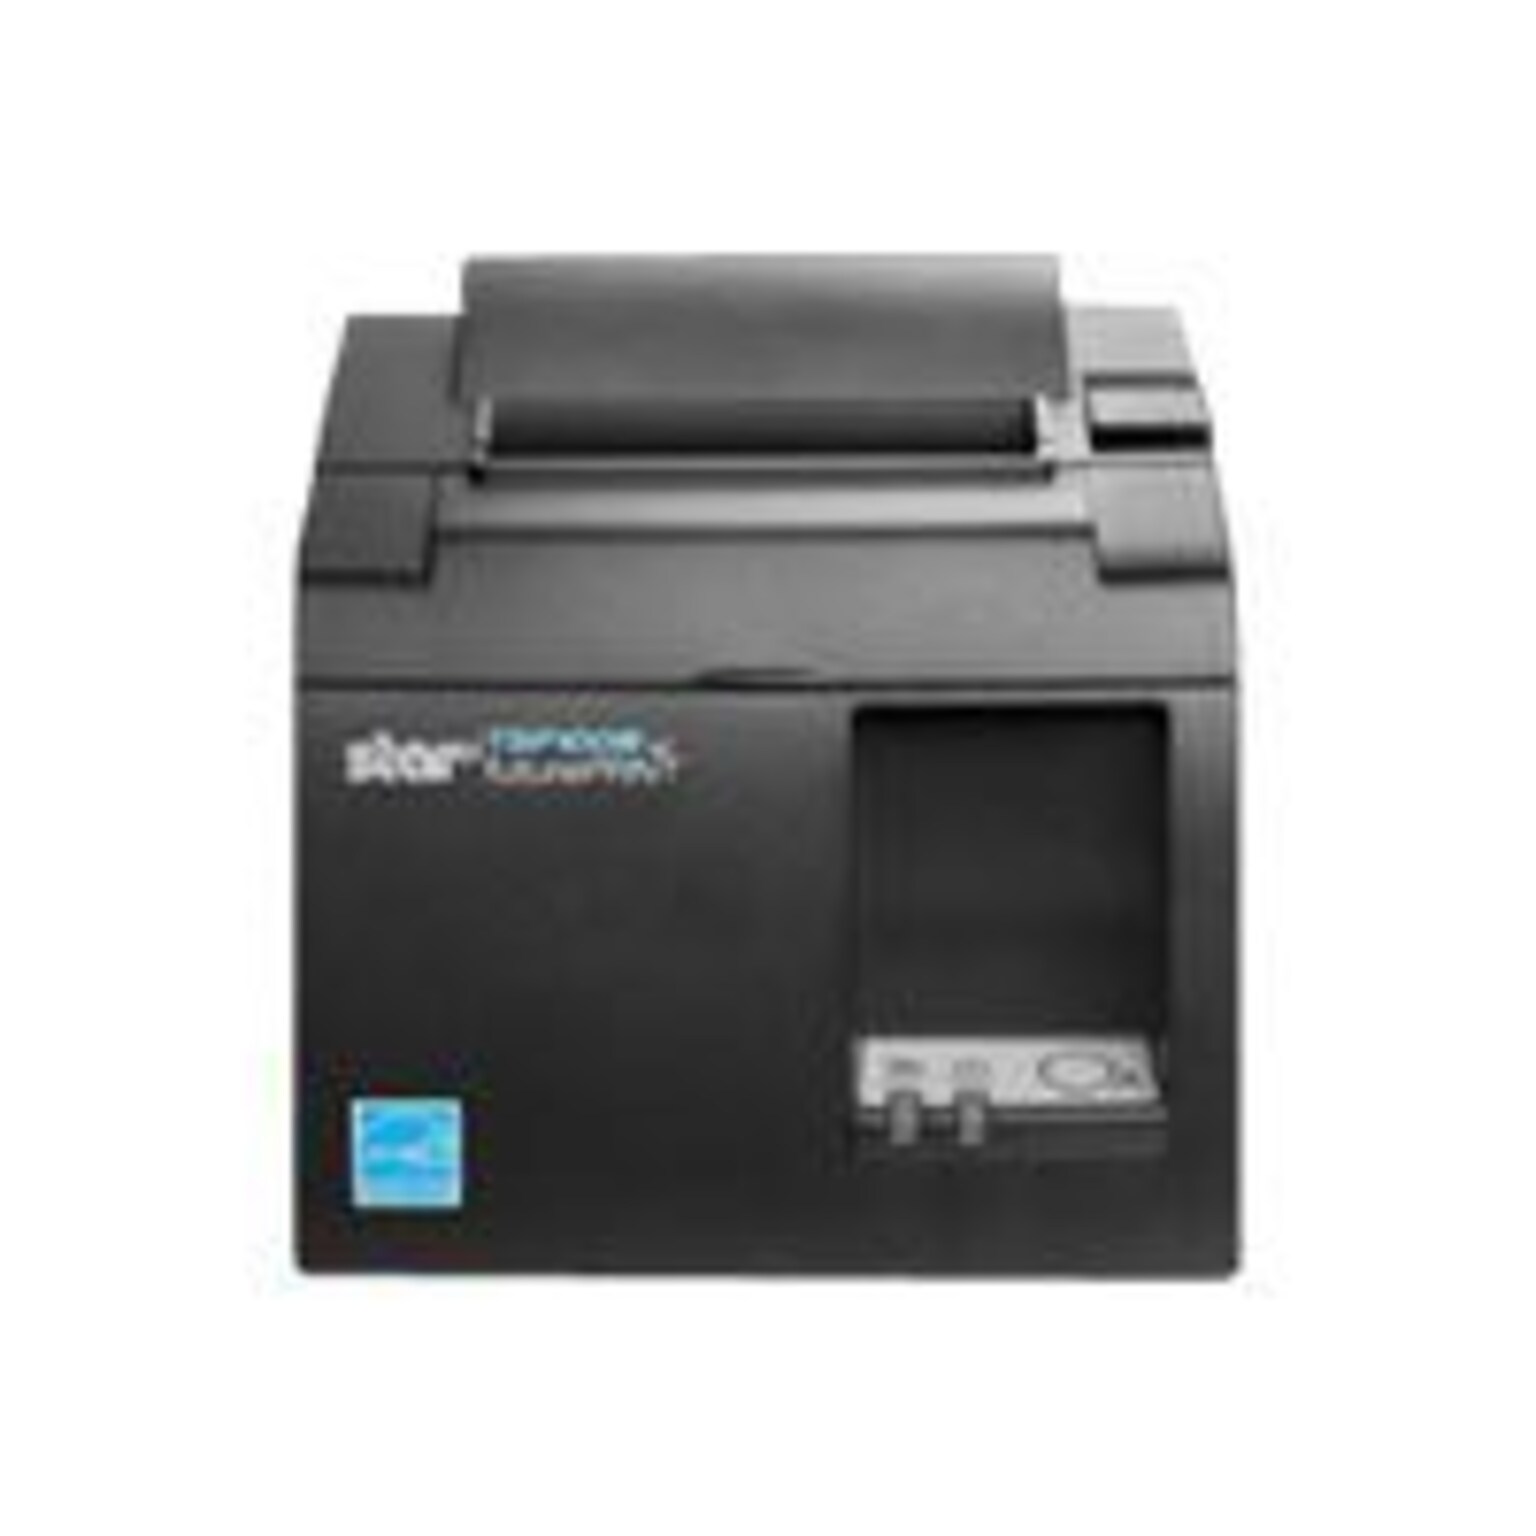 Star Micronics® TSP100III TSP143IIIW GRY US Direct Thermal Receipt Printer, USB/Wireless LAN, Gray